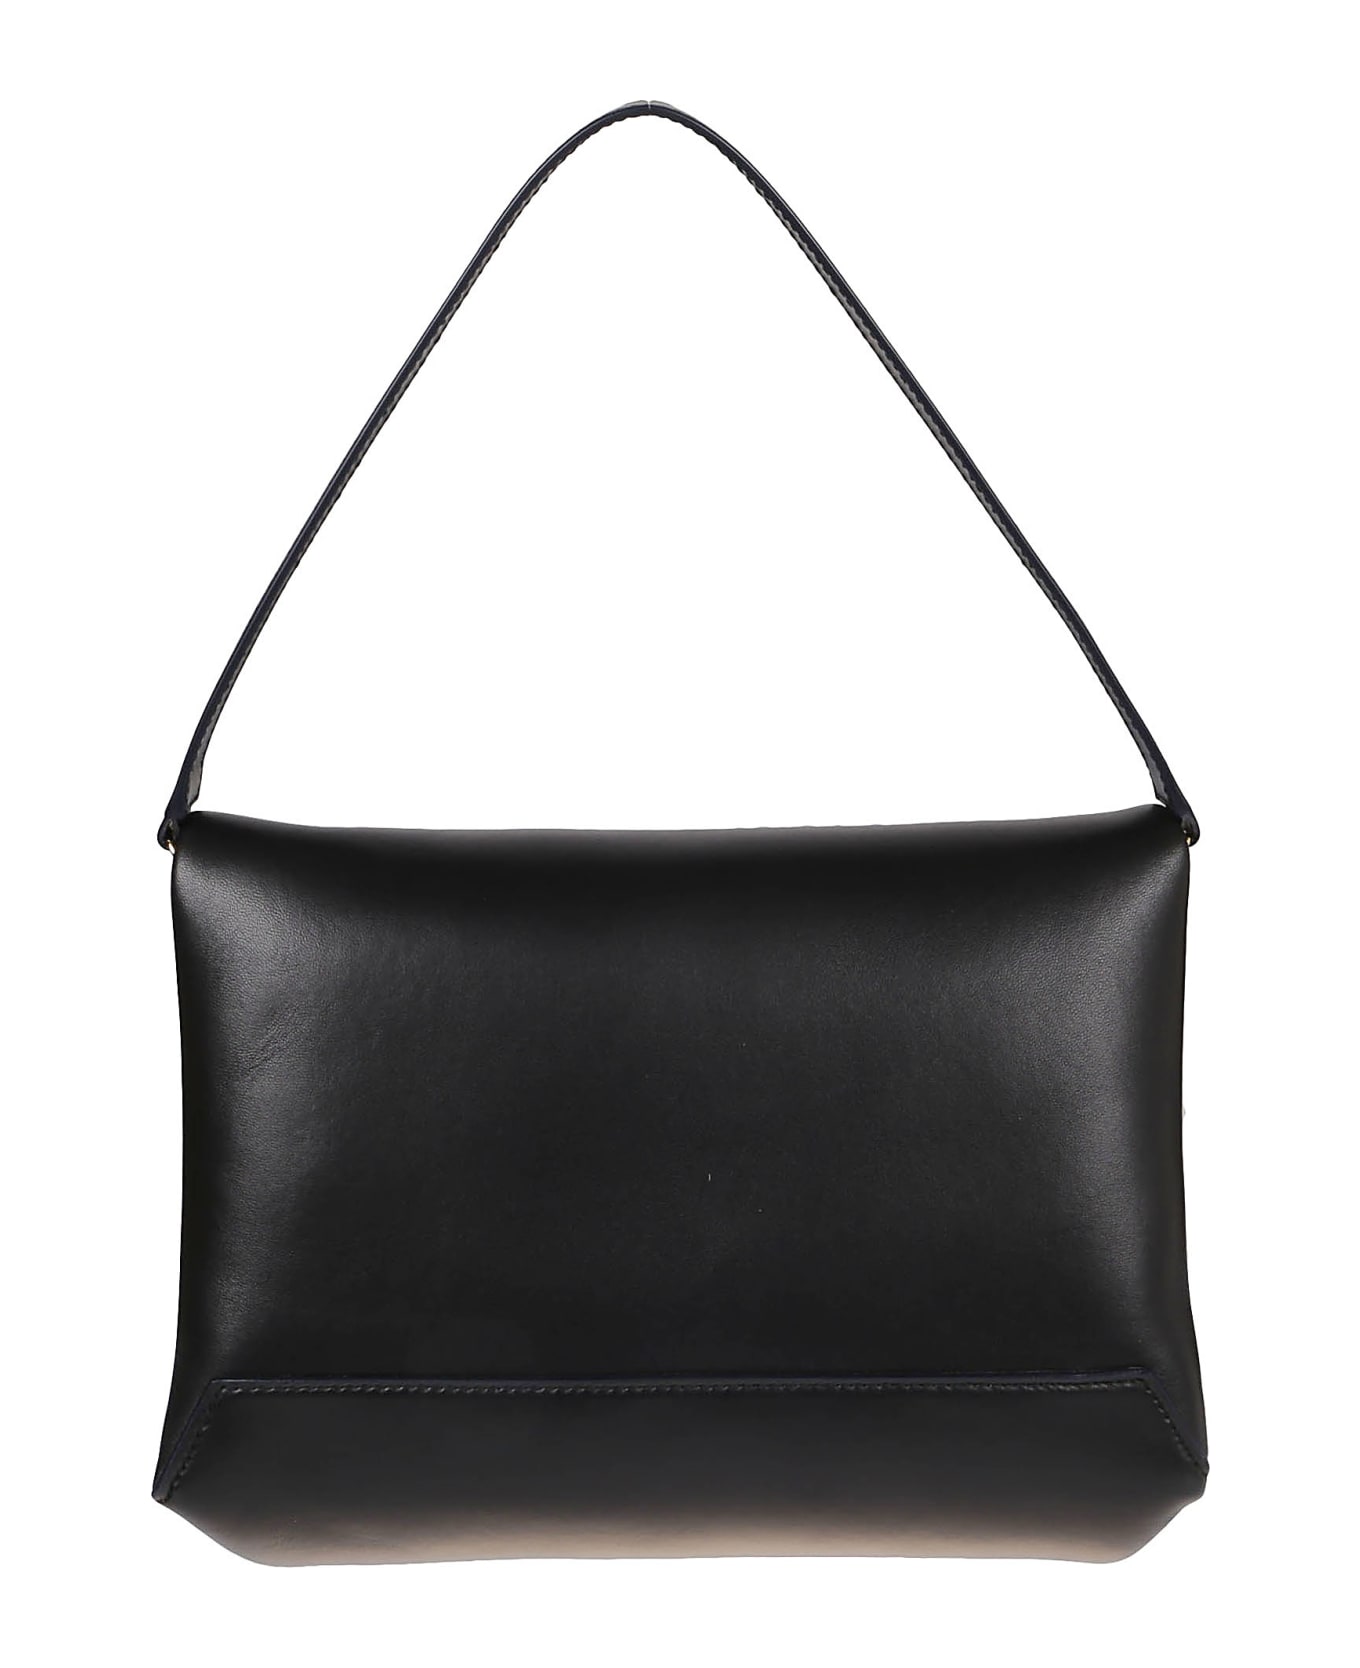 Victoria Beckham Chain Pouch With Strap Bag - Black